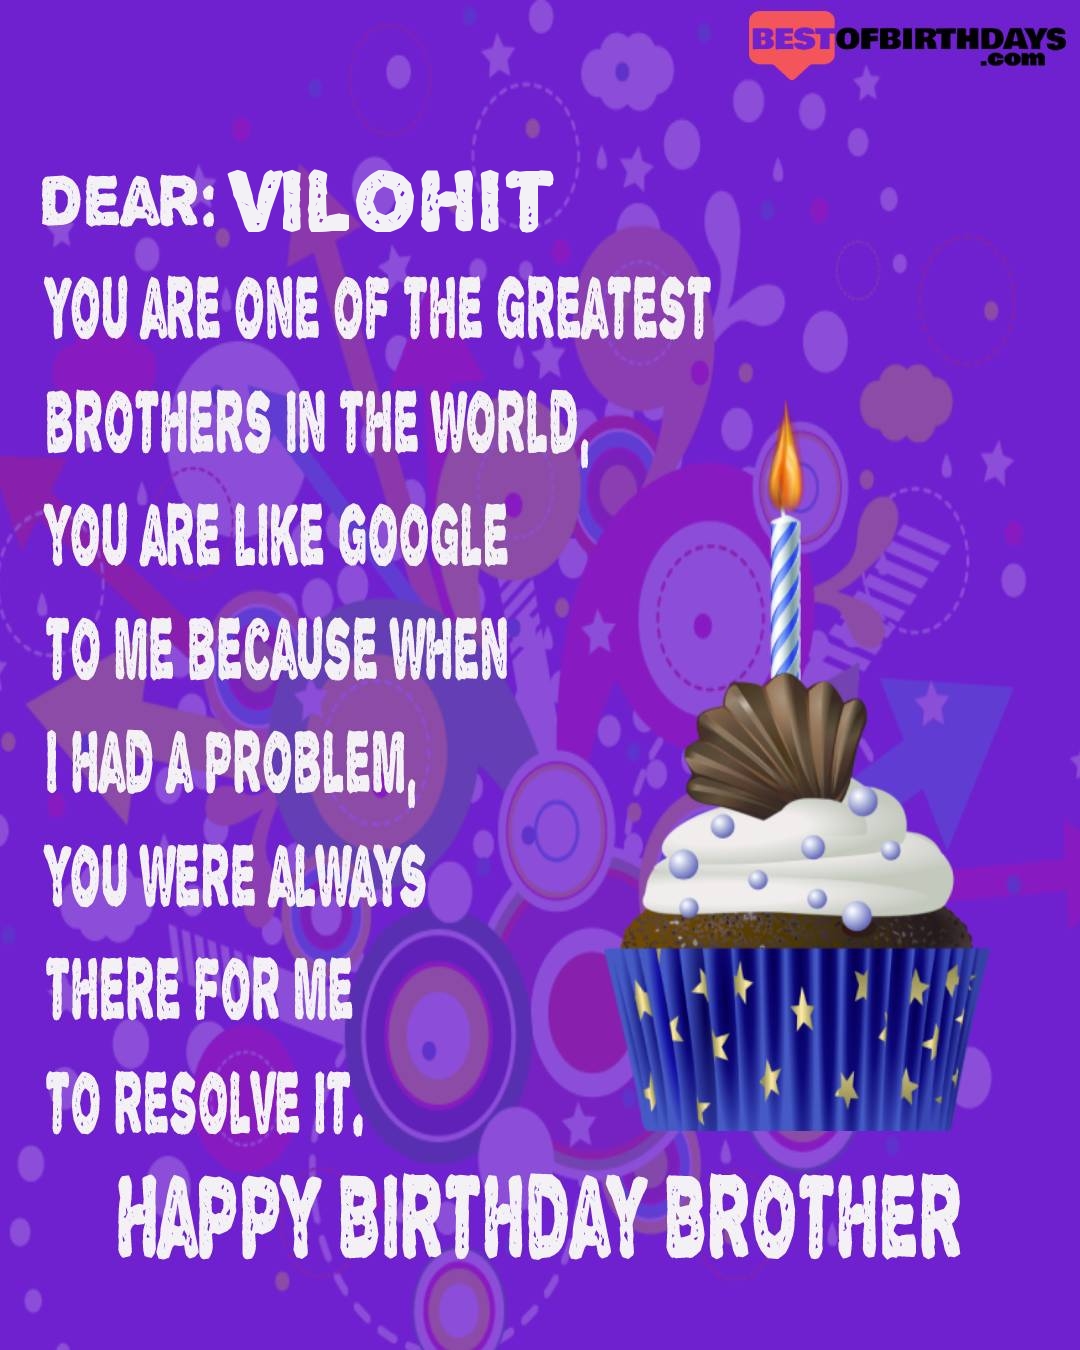 Happy birthday vilohit bhai brother bro